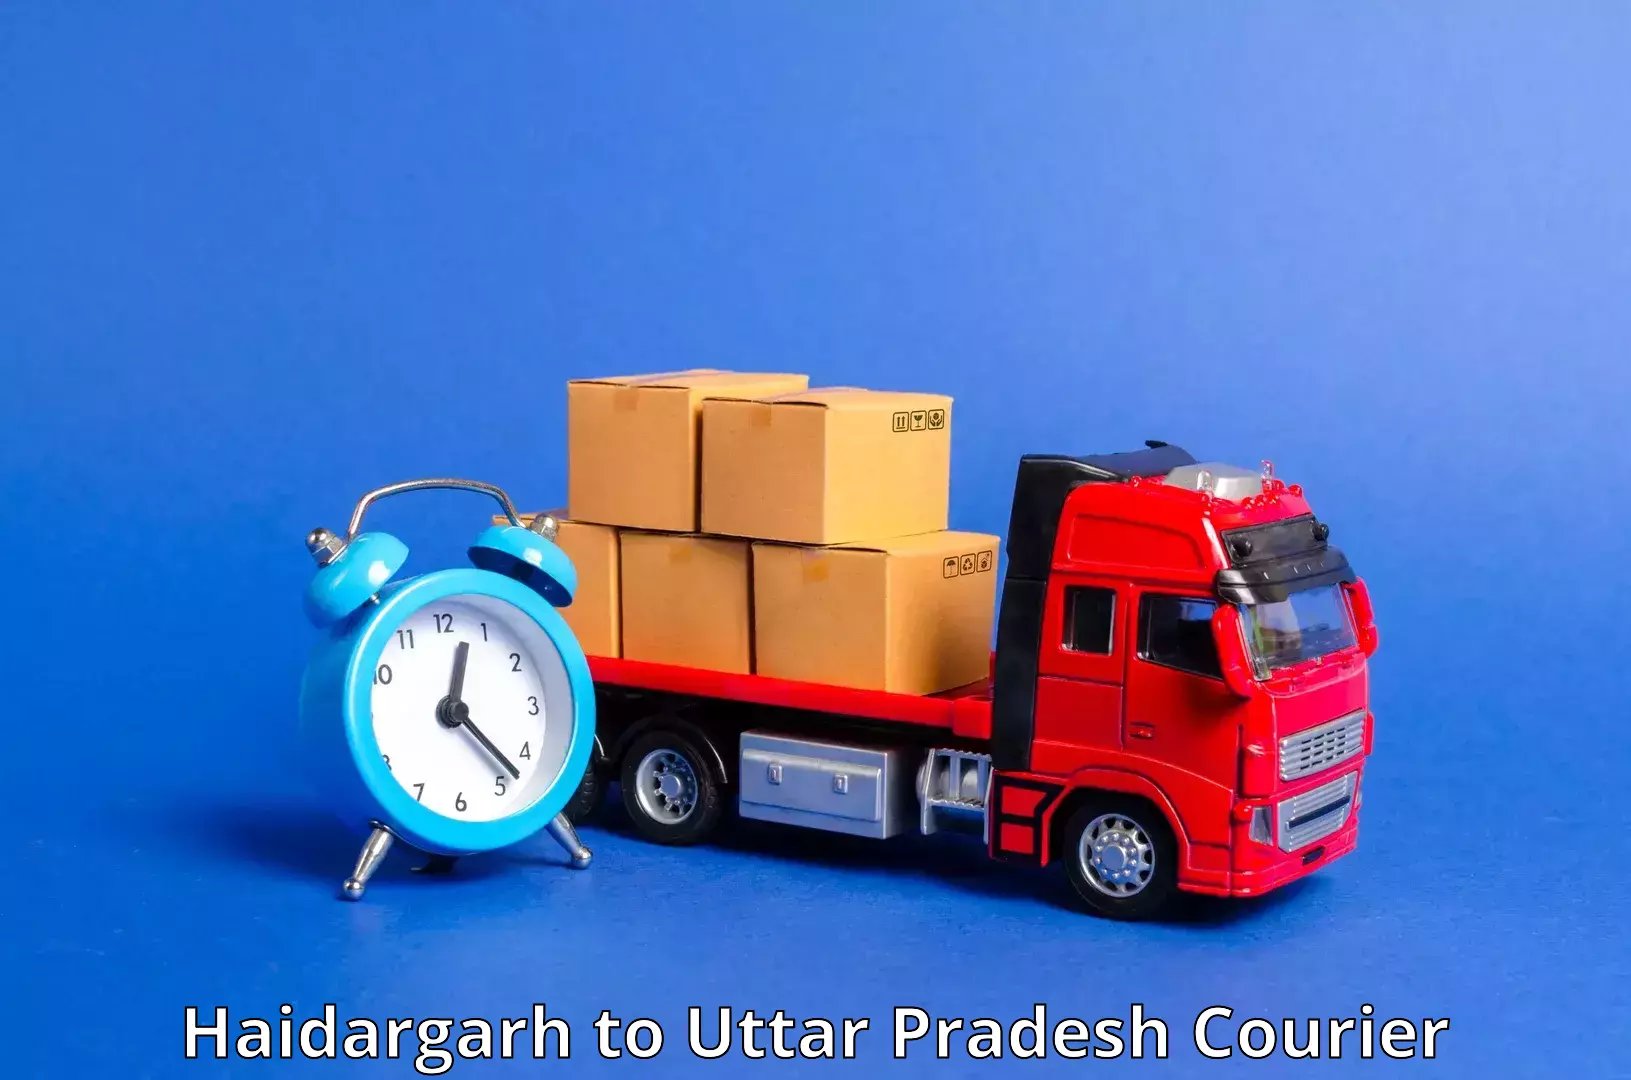 Modern courier technology Haidargarh to Akbarpur